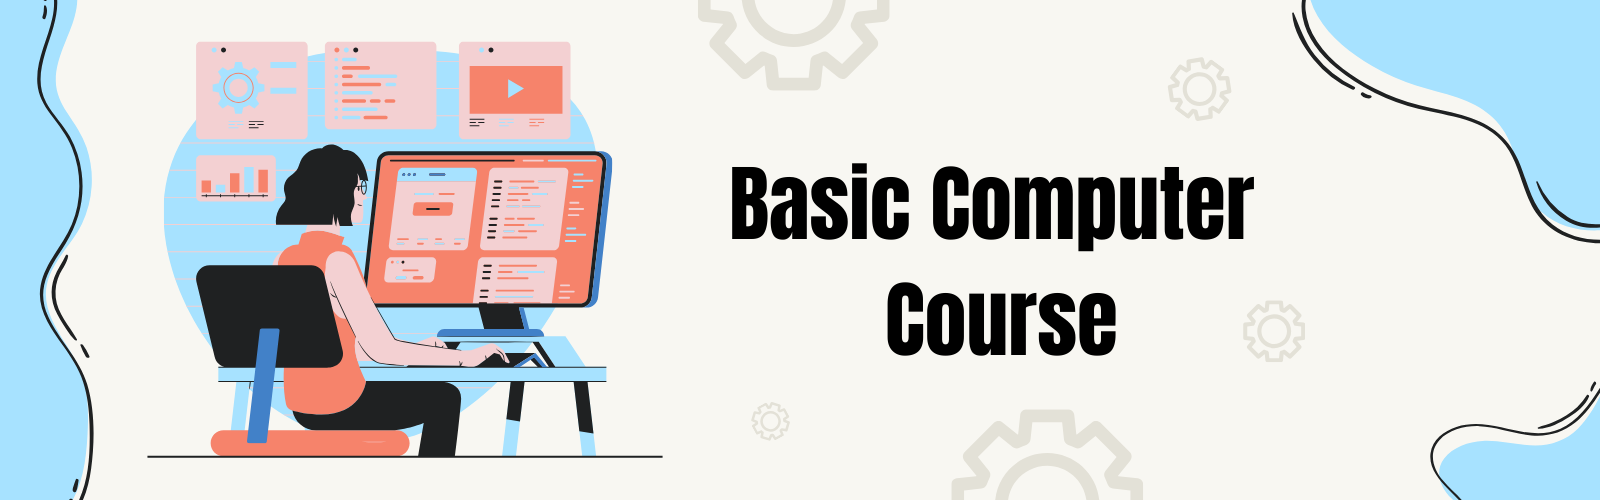 Basic computer Course Banner